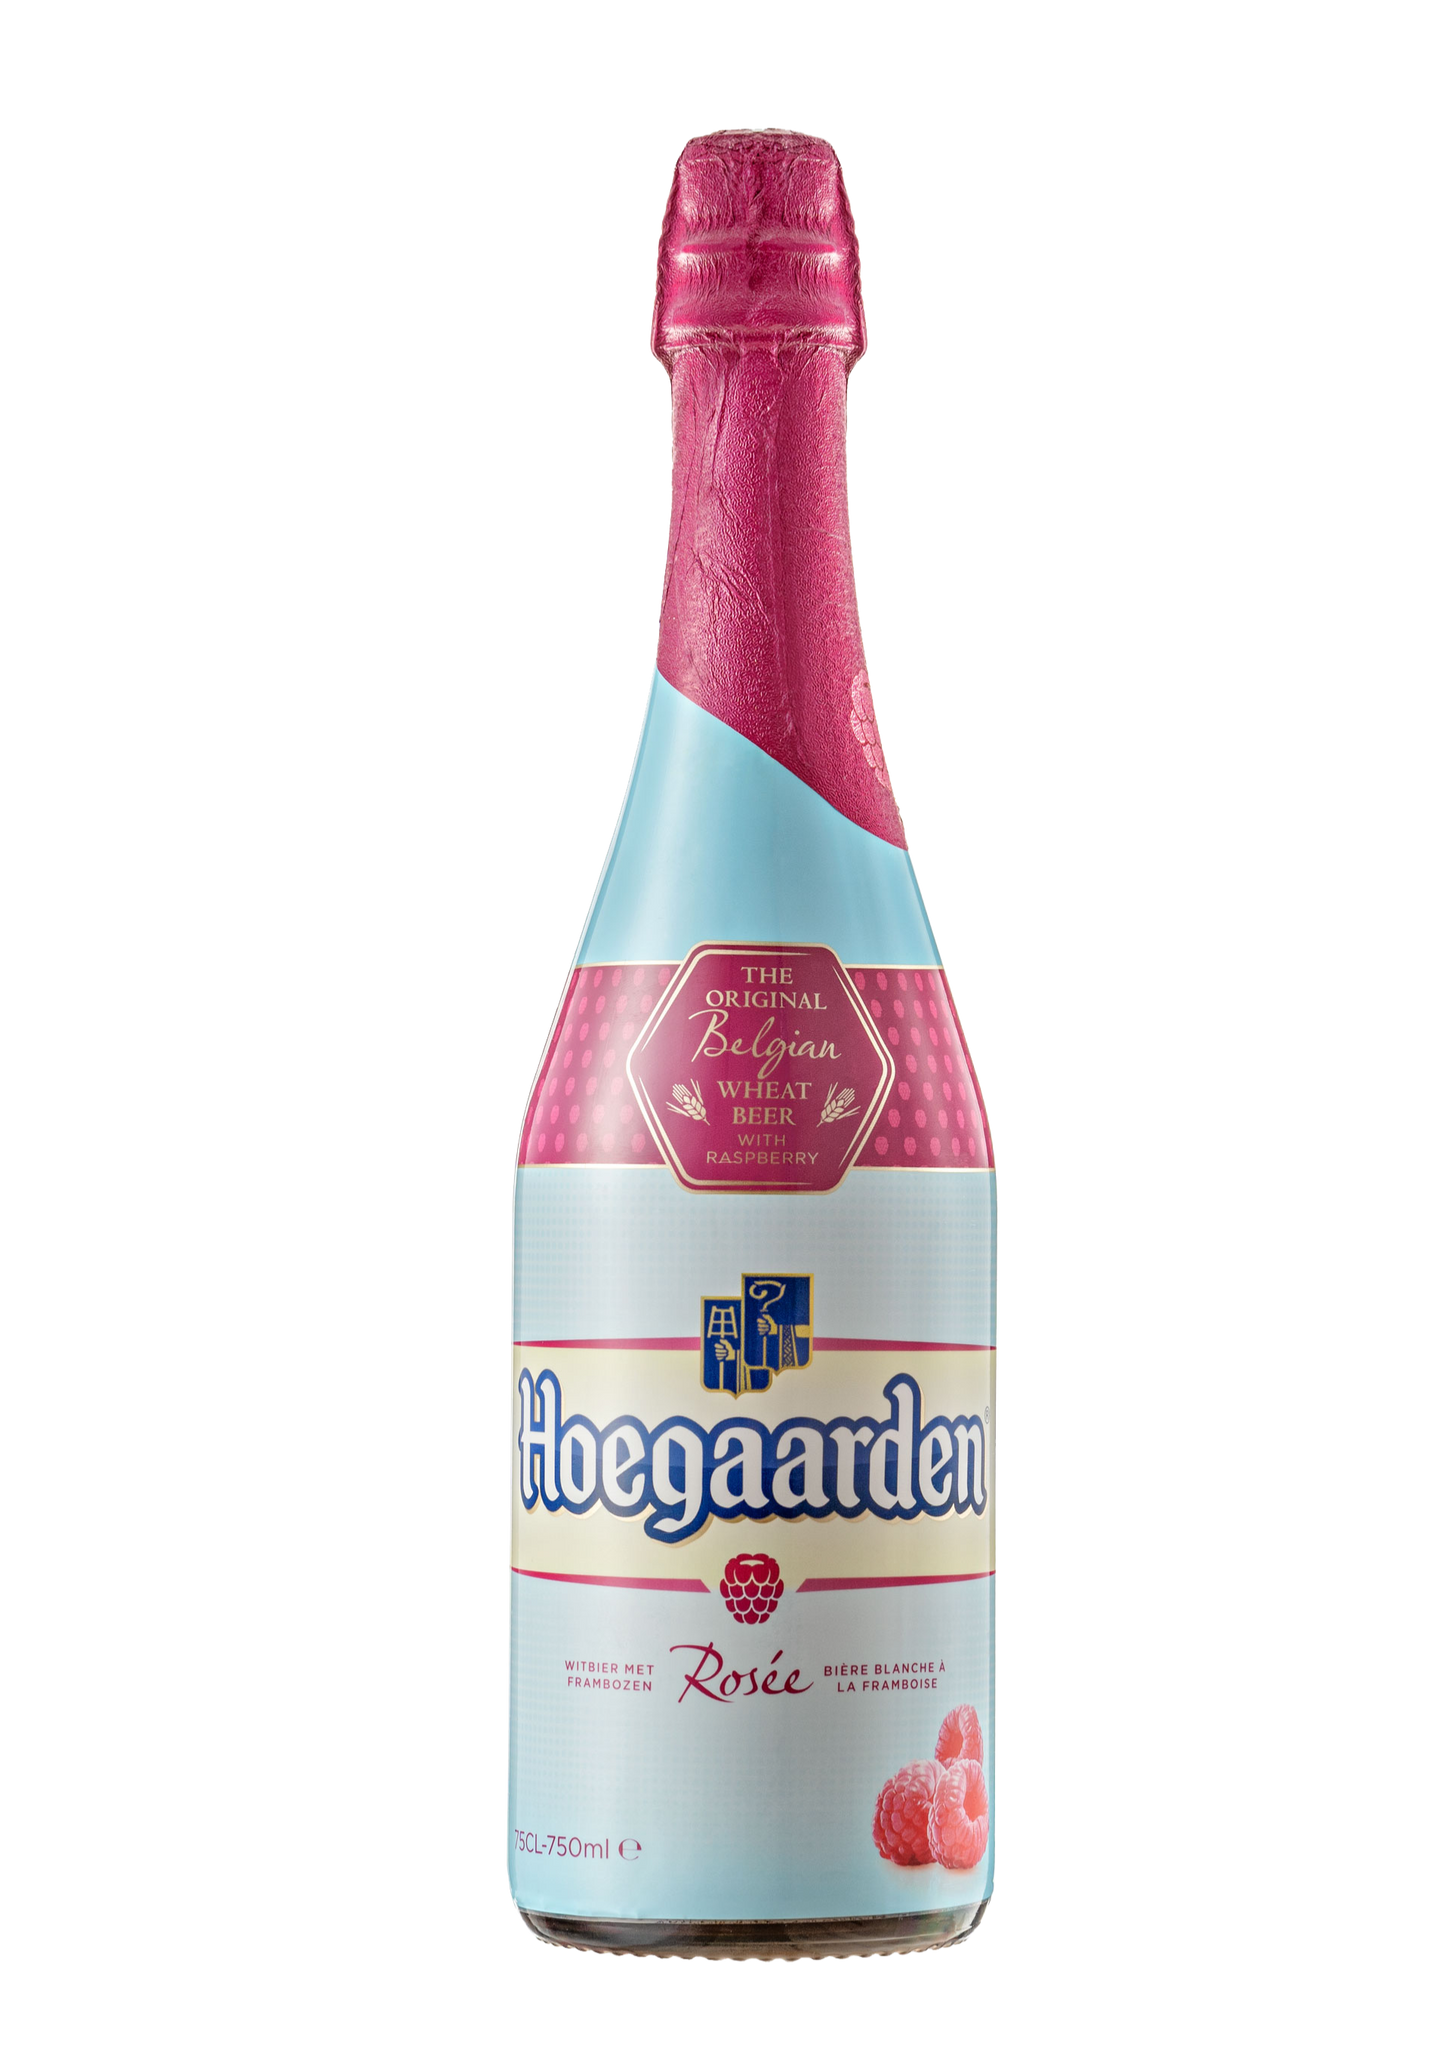 Hoegaarden Rosee 3% Bottle 750ml.